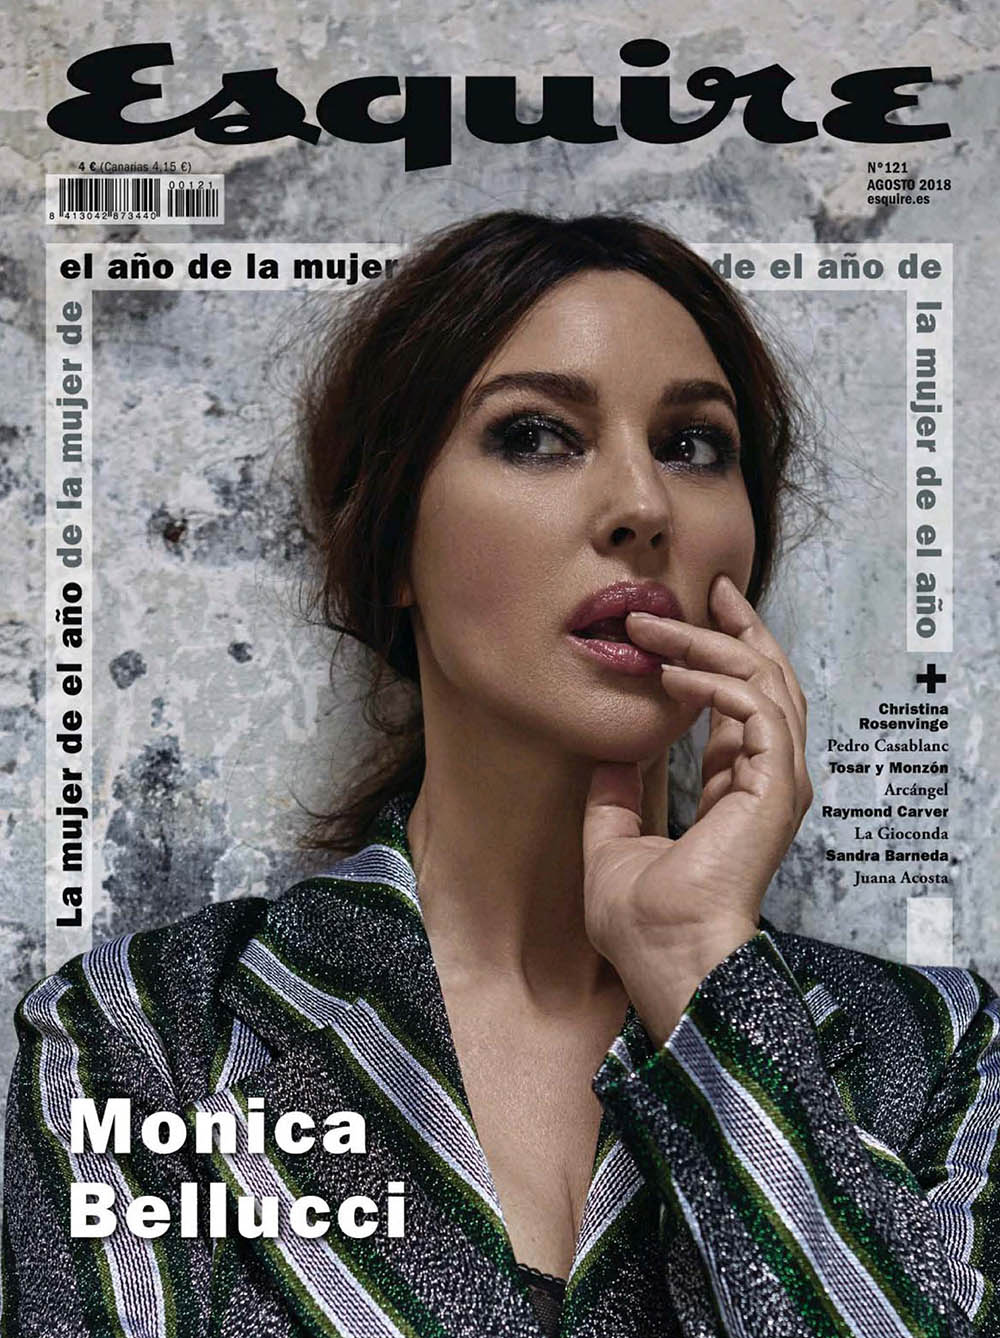 Monica-Bellucci-covers-Esquire-Spain-Aug